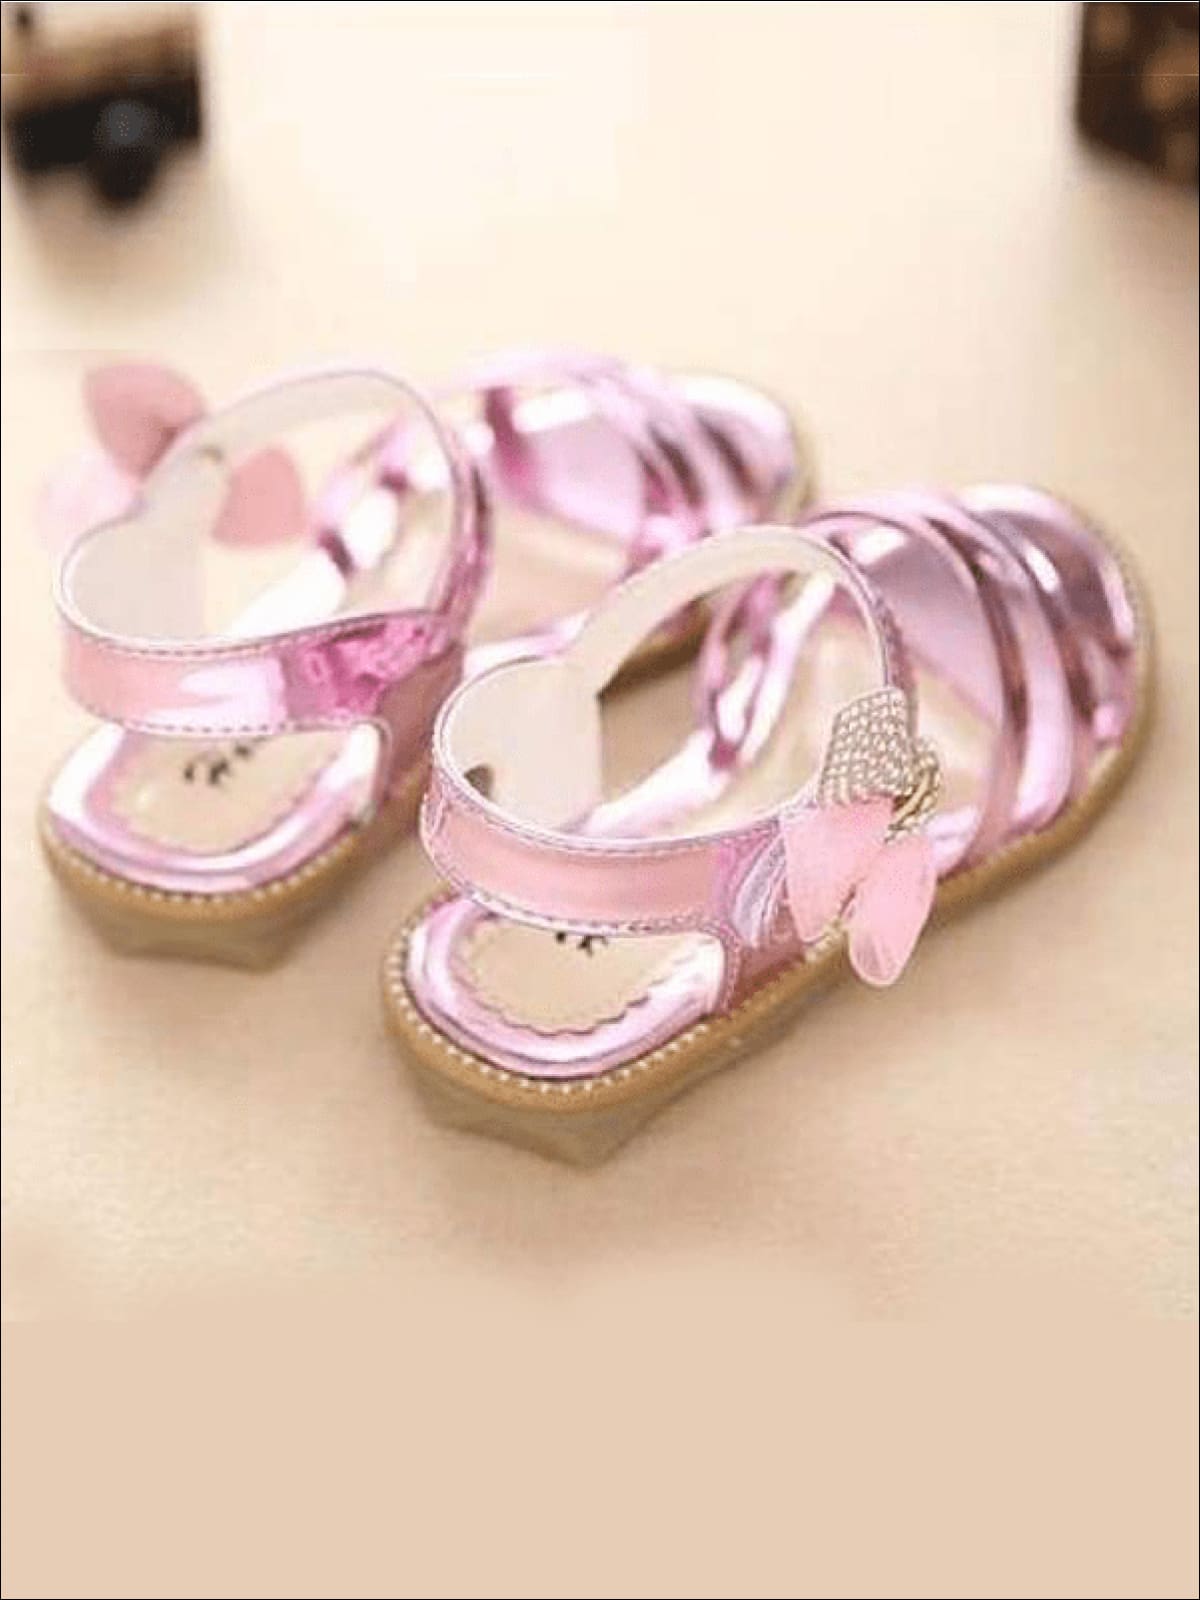 Little Girls Shiny Metallic Butterfly Velcro Sandals - Mia Belle Girls